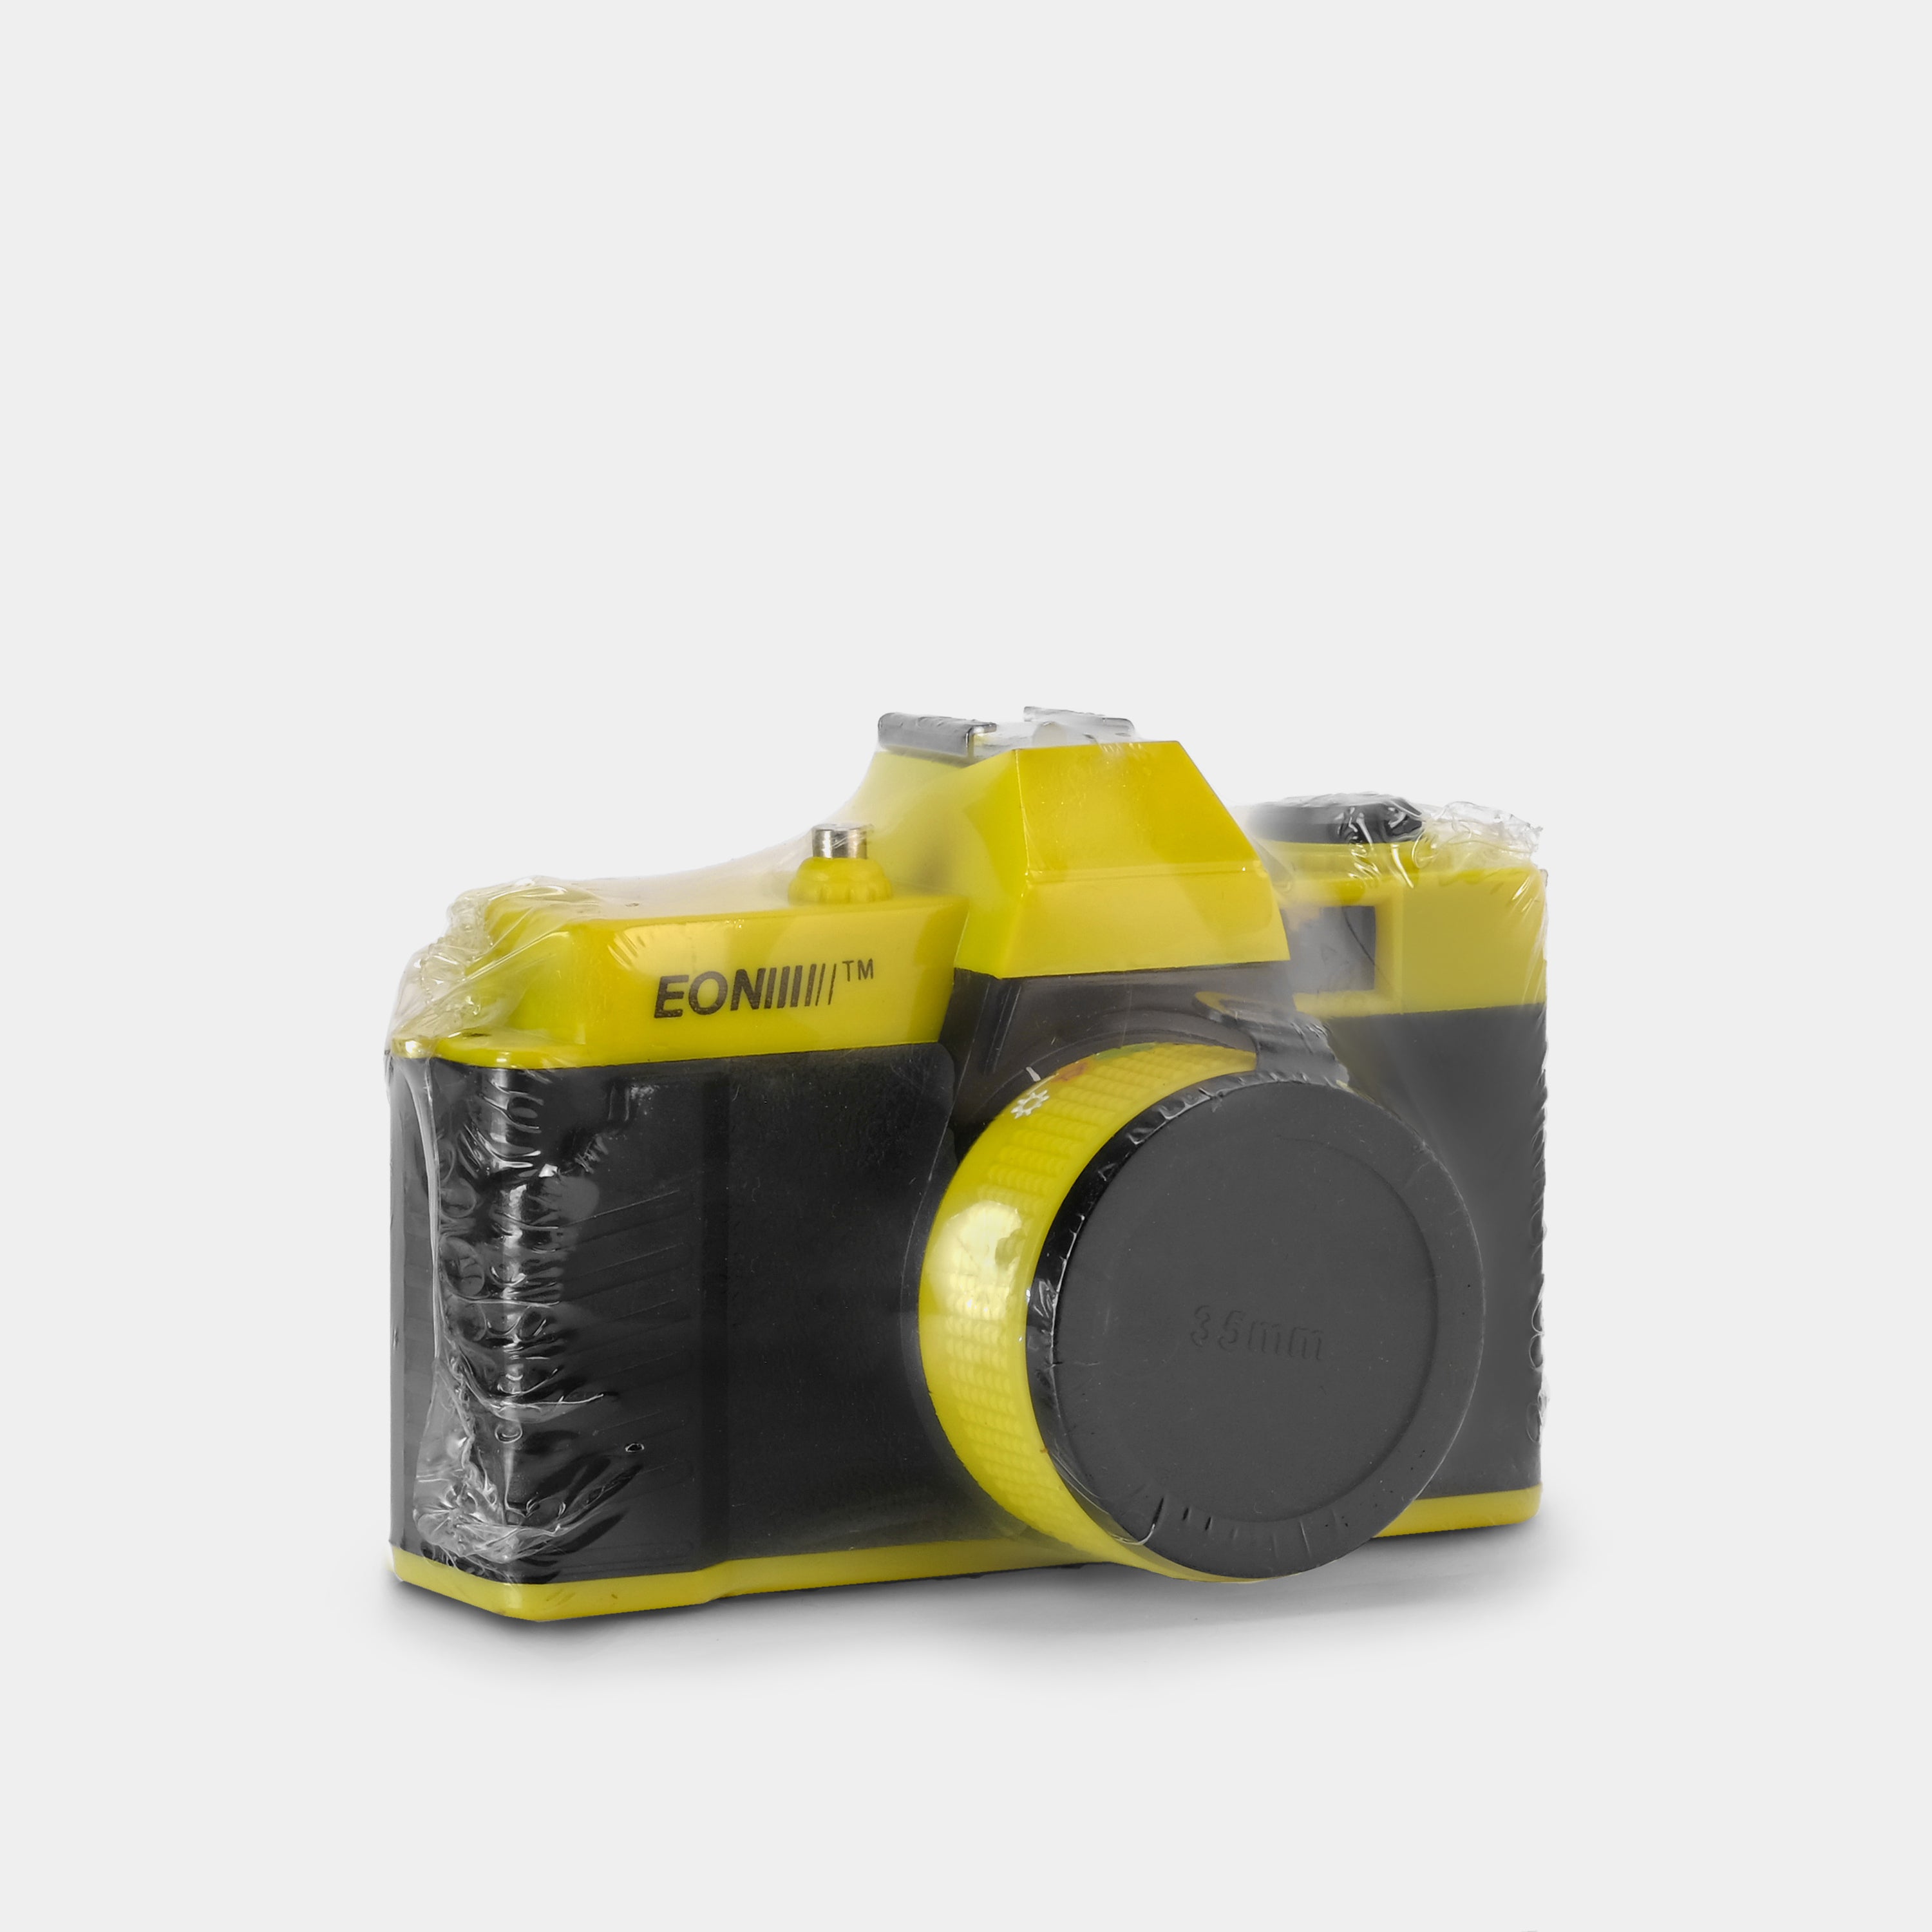 EONIII 35mm Film Camera